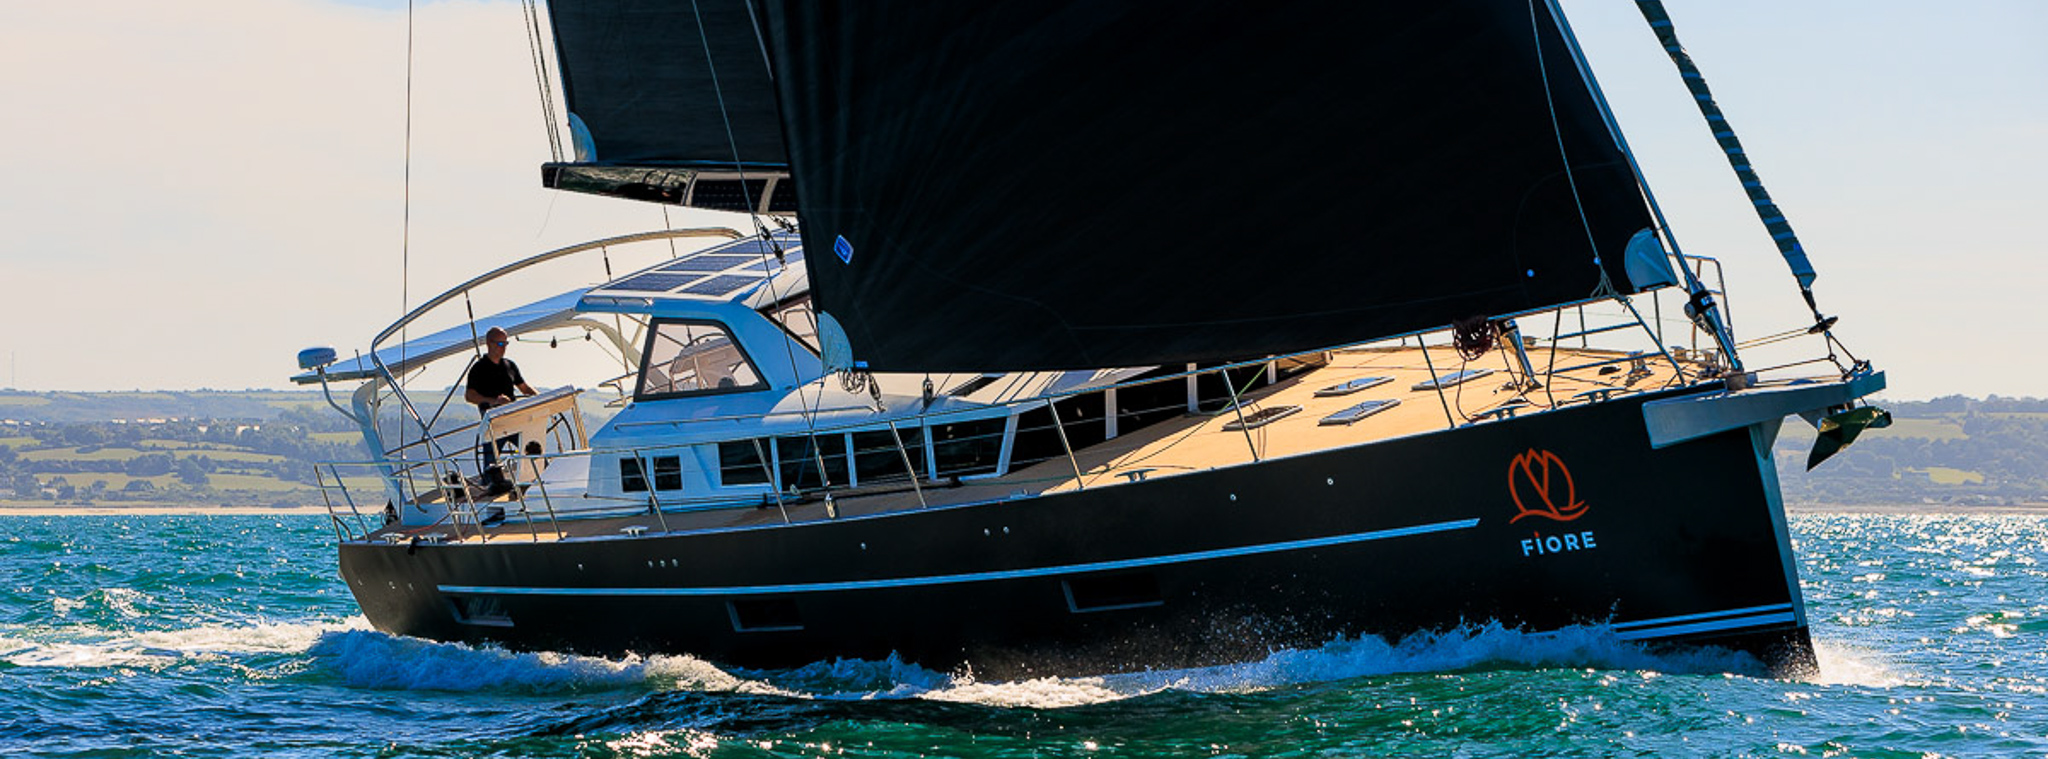 garcia yachts for sale australia